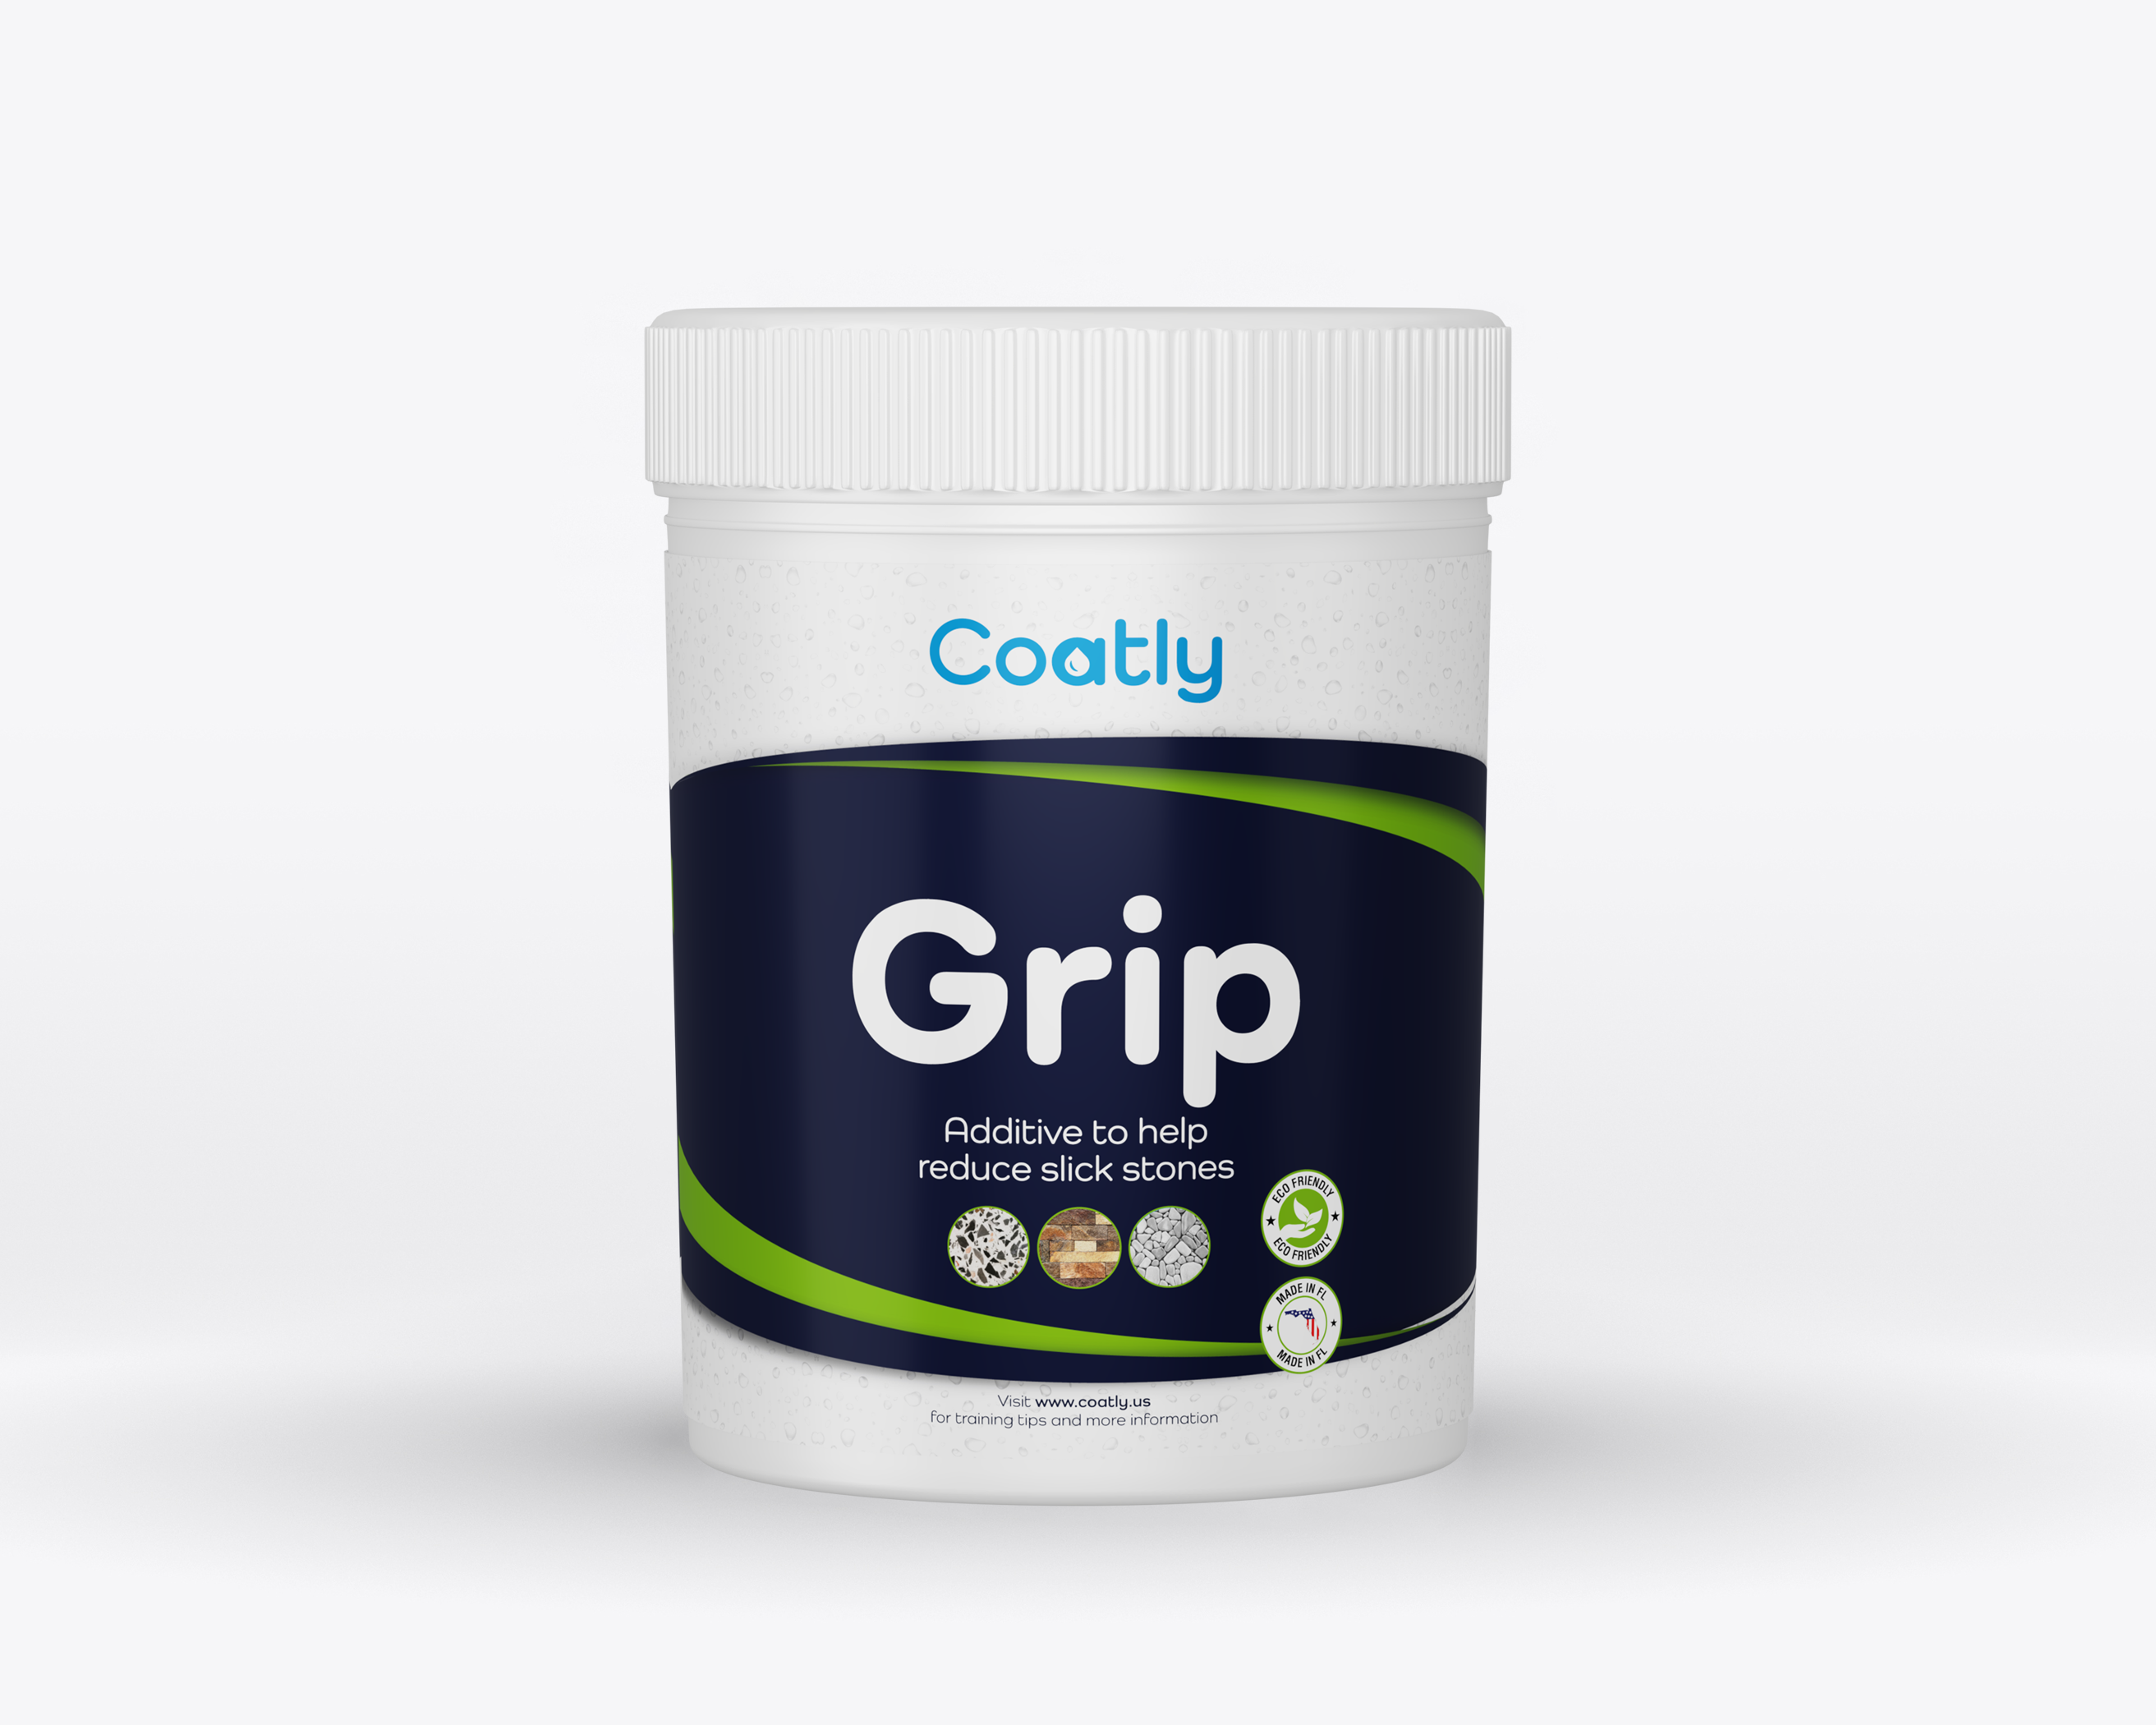 Coatly Grip